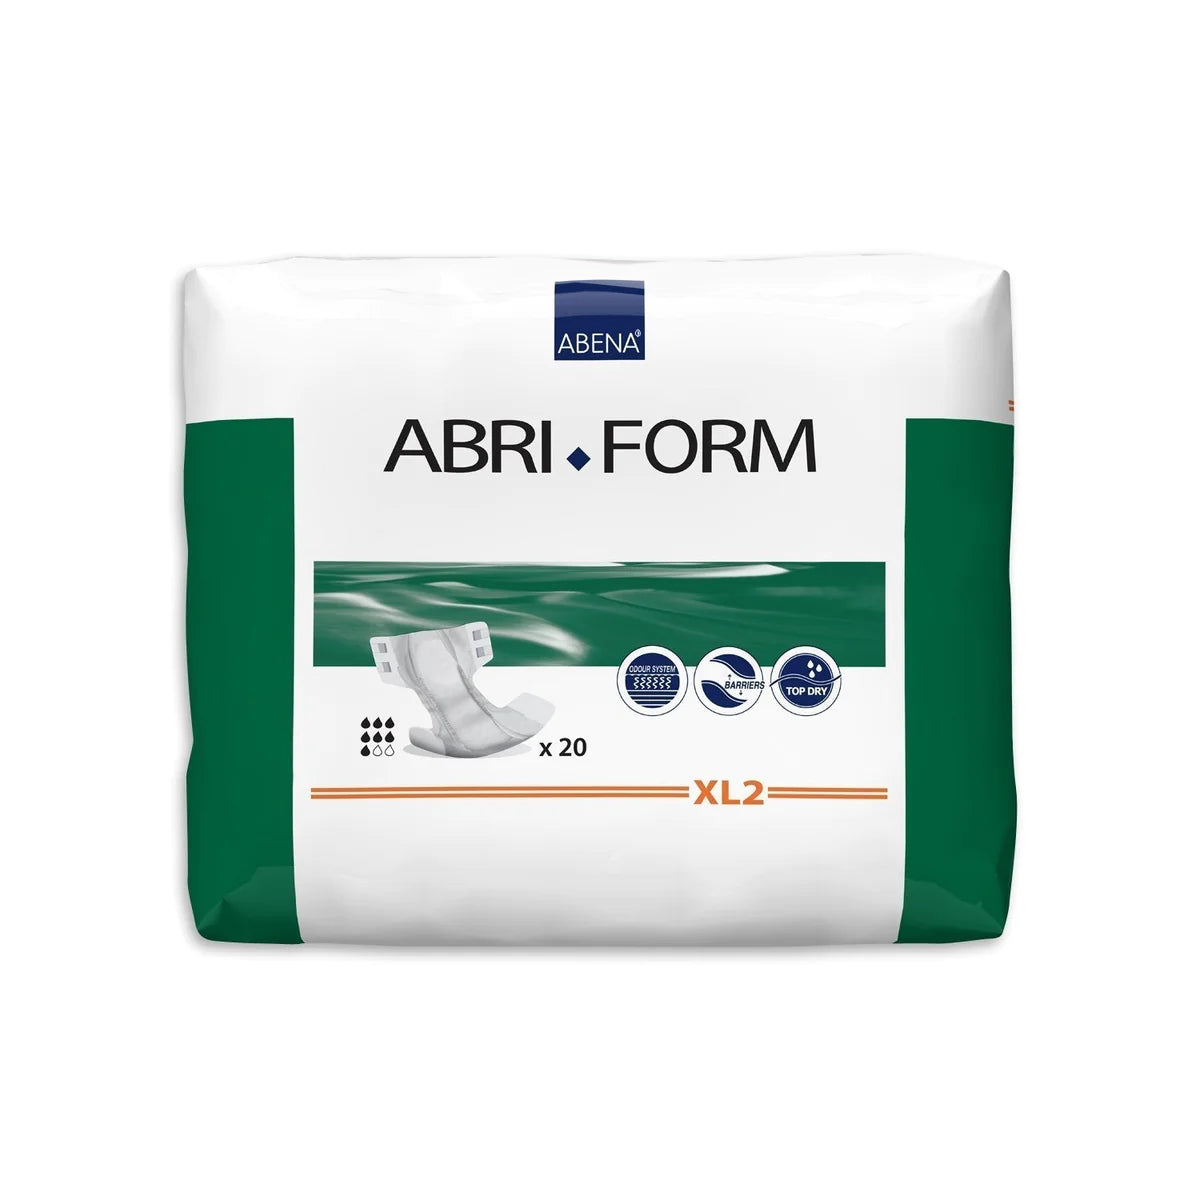 Abri-Form Comfort XL2 3300mL 110-170cm